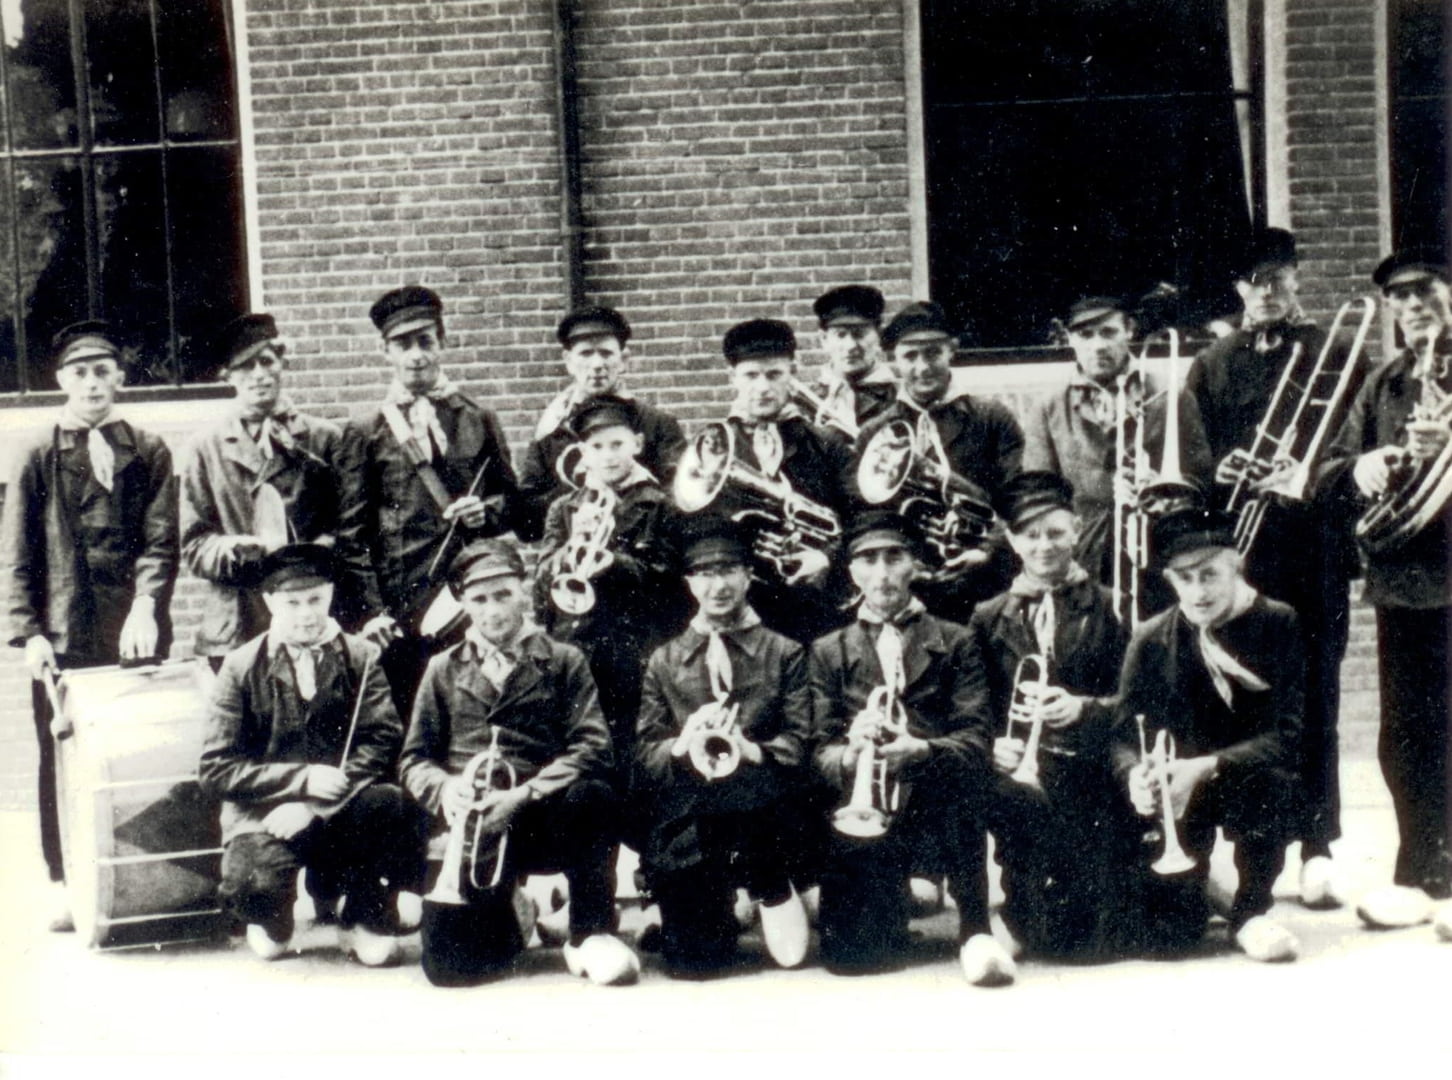 Muziekvereniging Crescendo als boerenkapel 1954 schoolfeest.